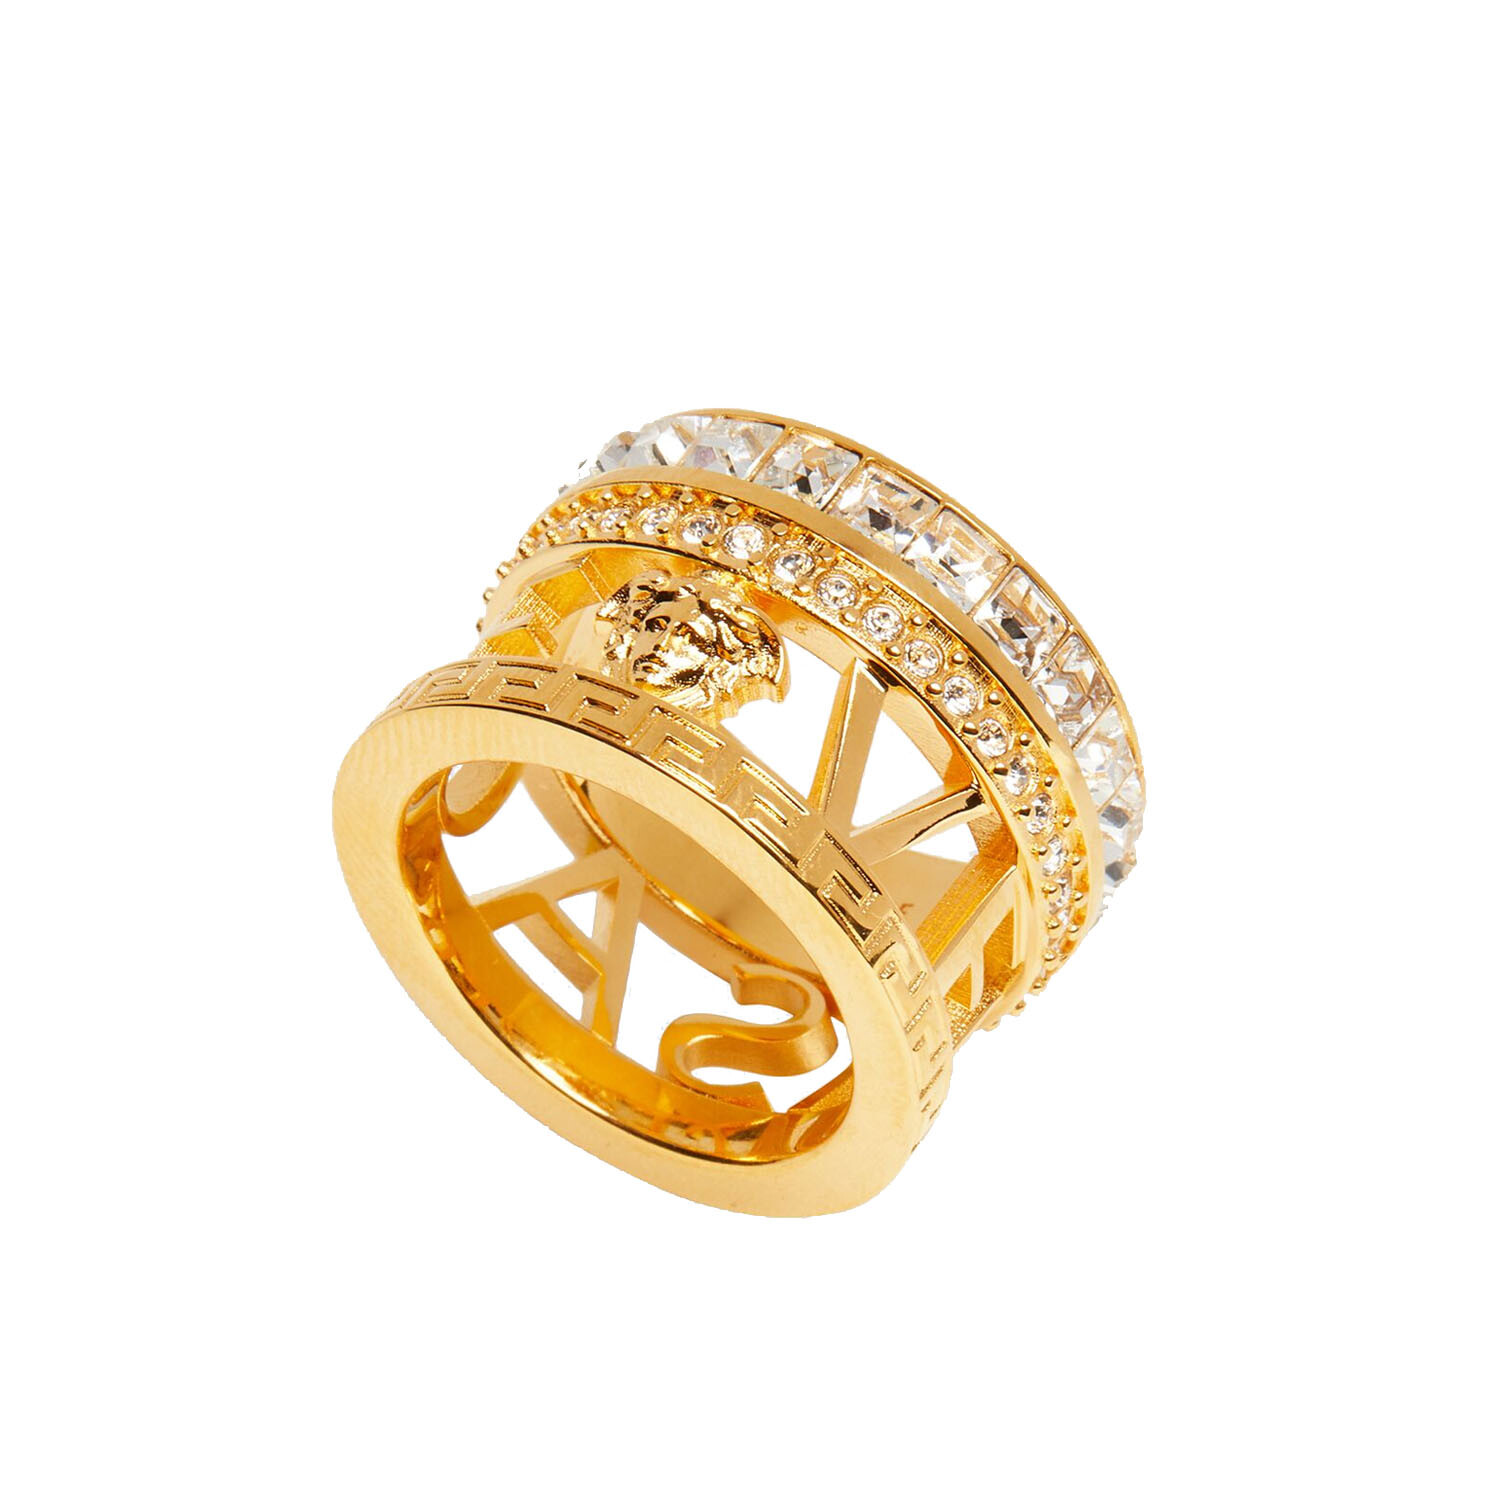 Versace кольцо Greca